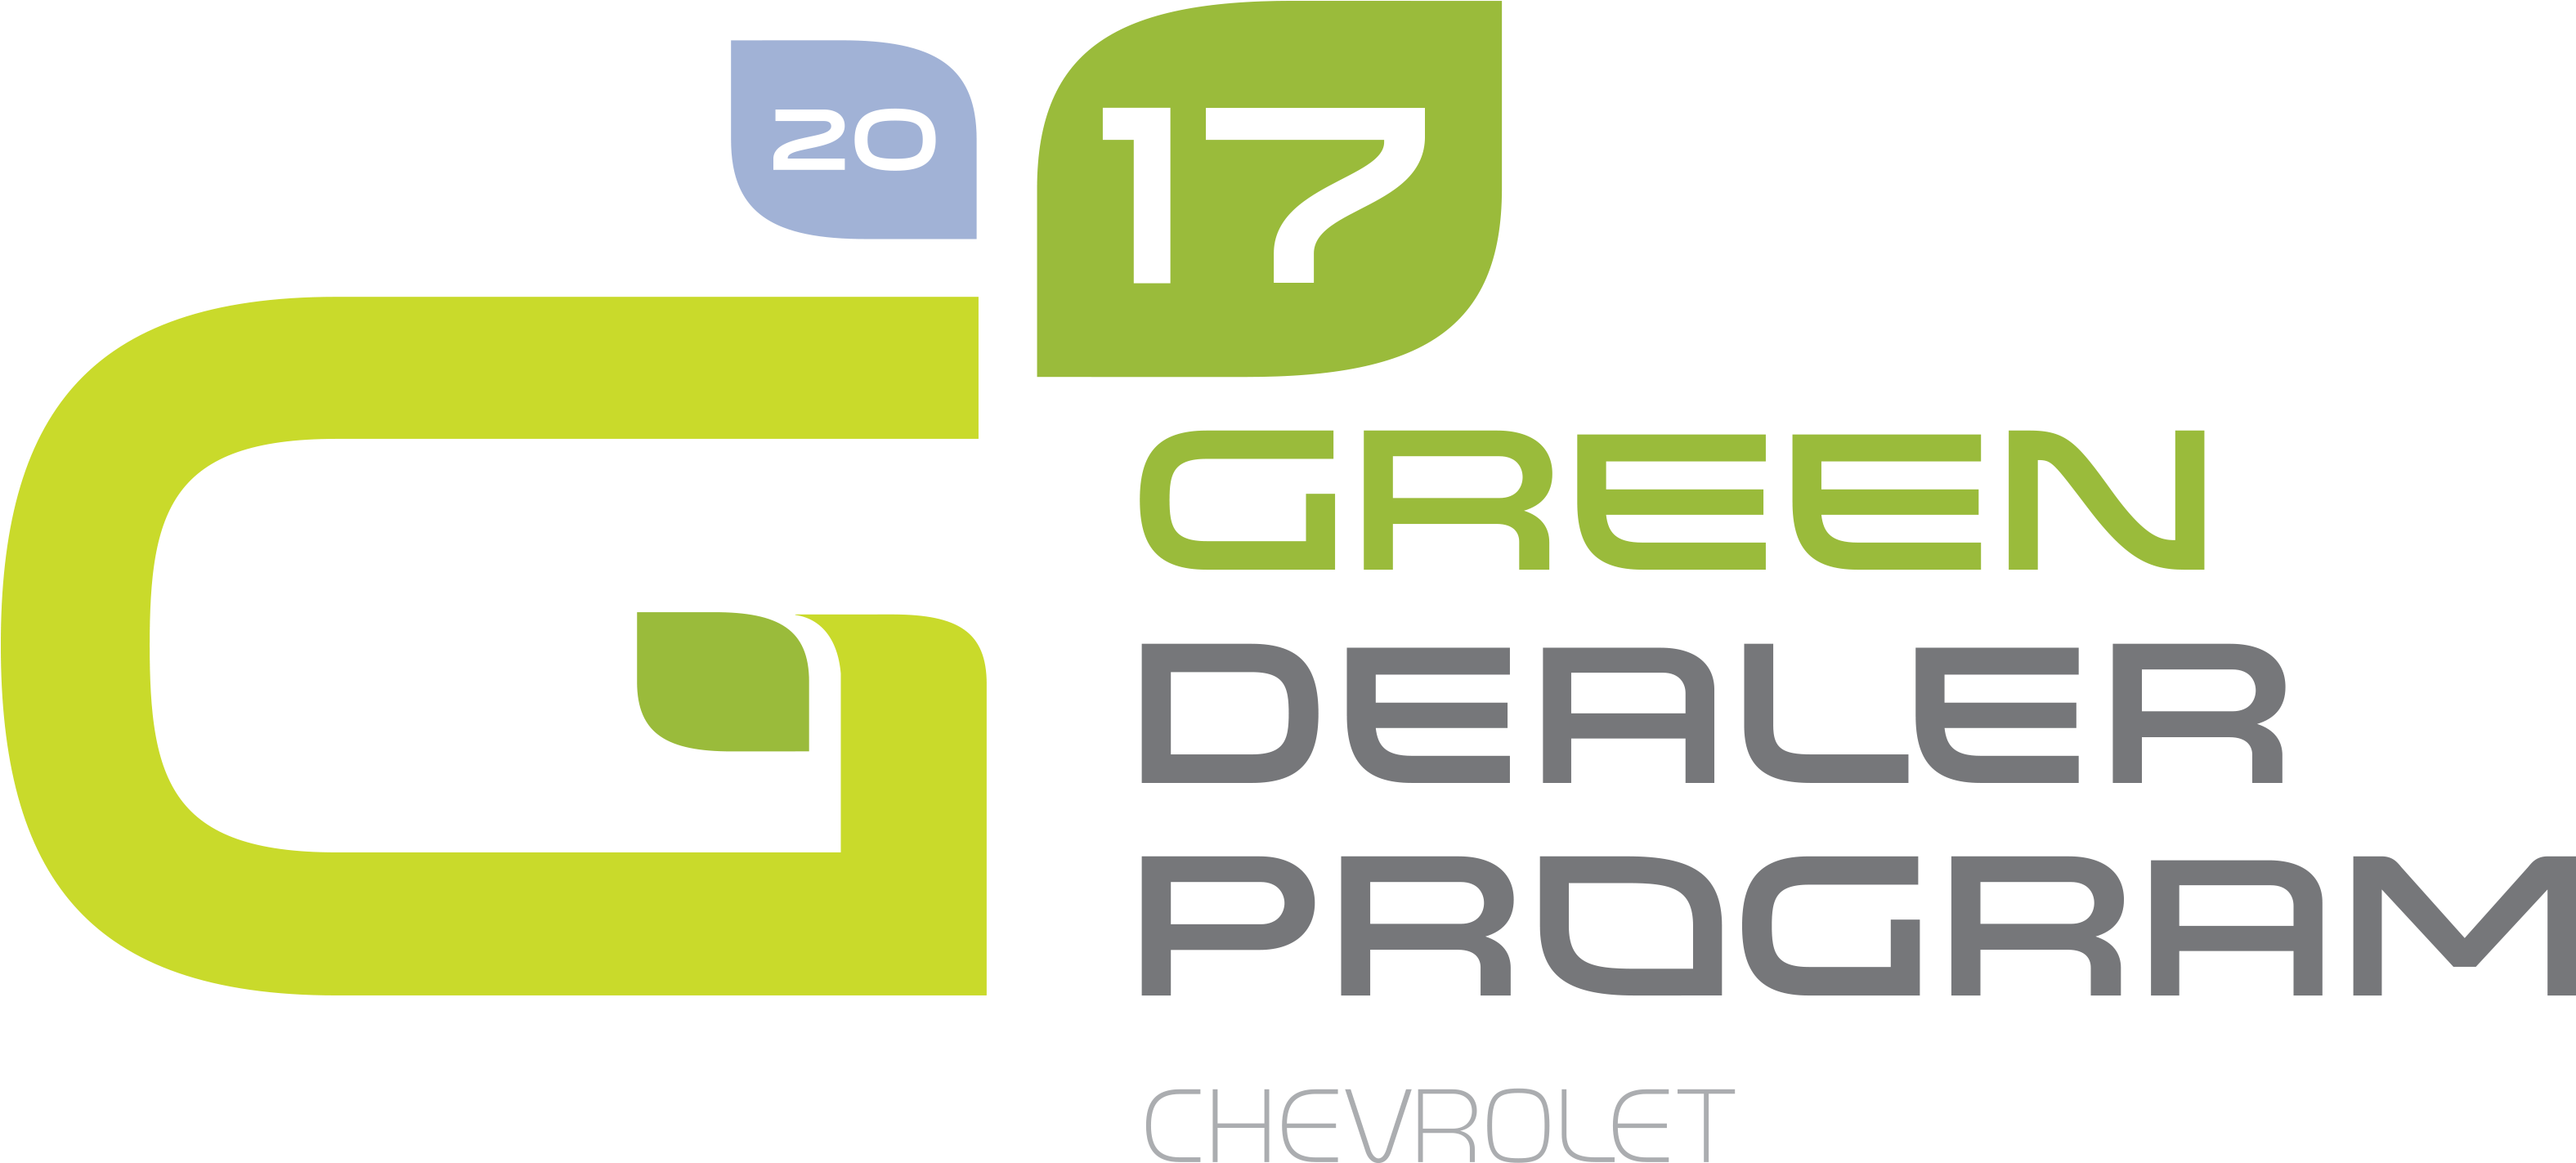 2017 Green Dealer - Dublin Chevrolet (3217x1473), Png Download